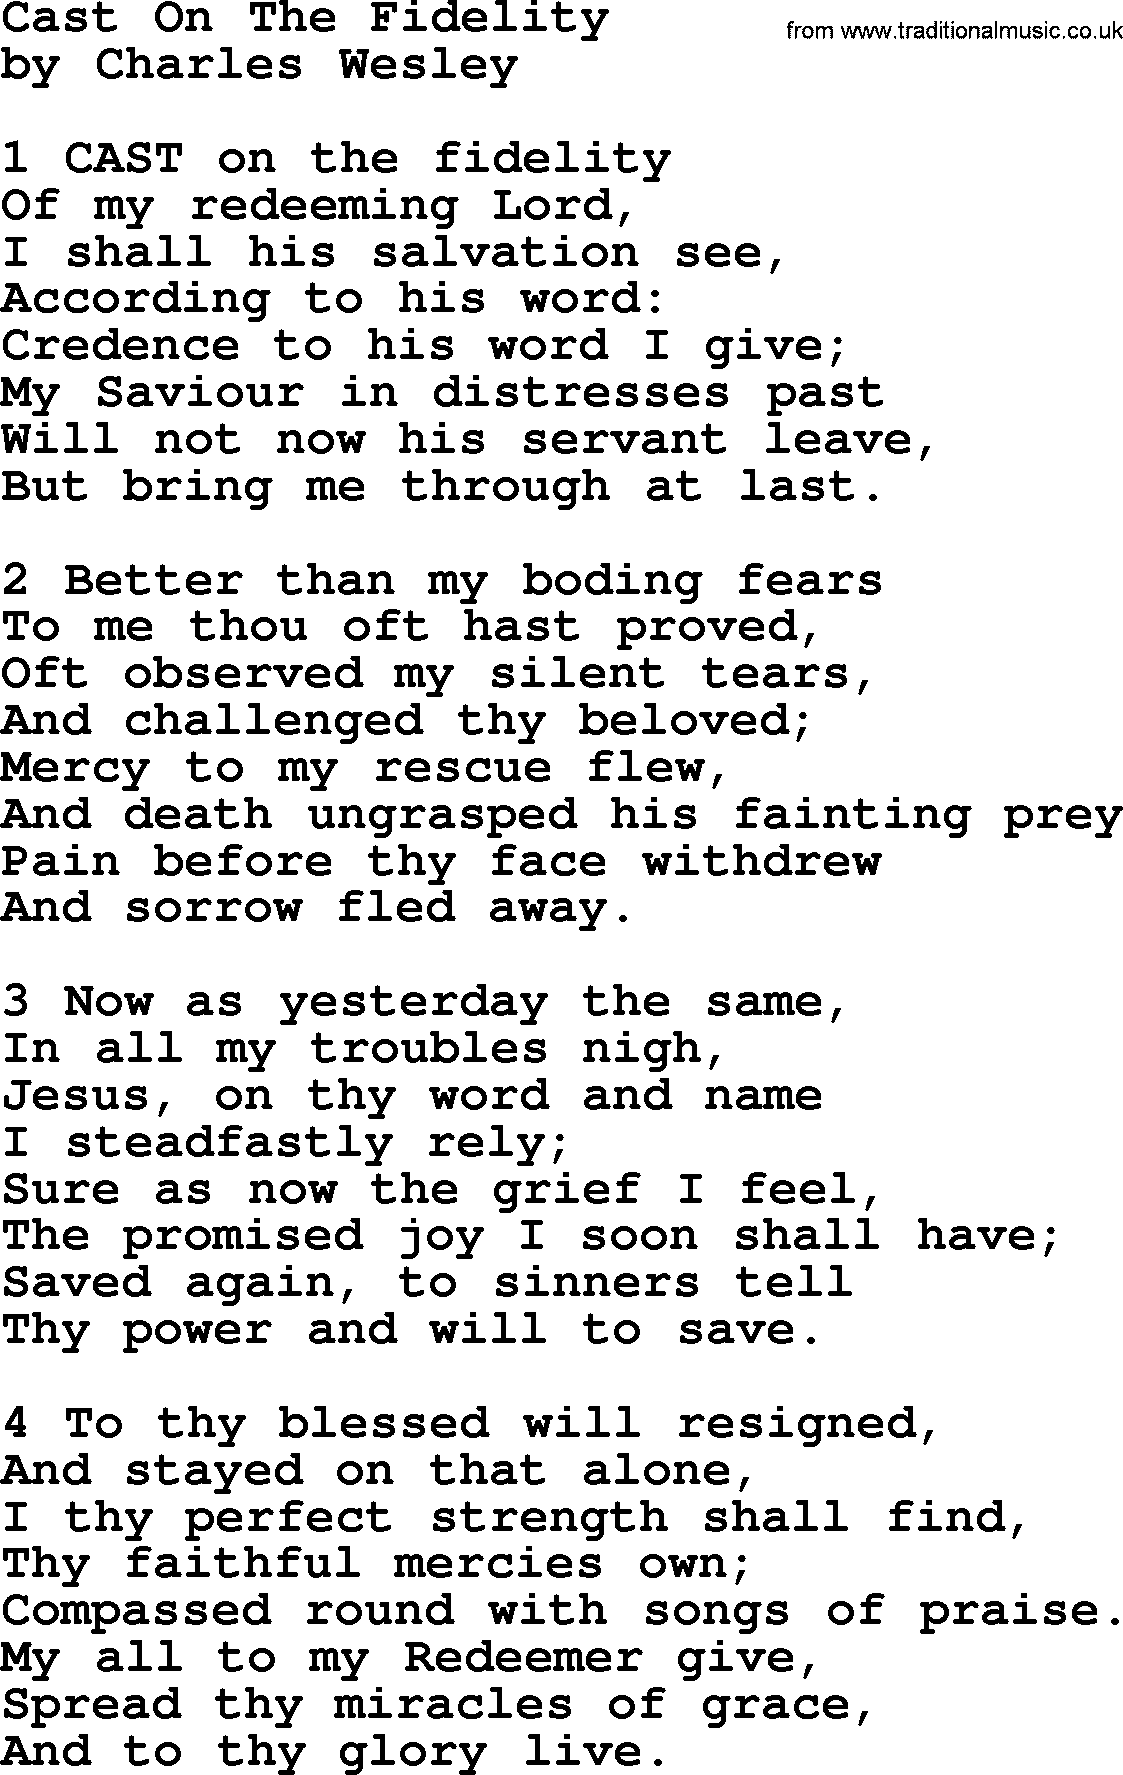 Charles Wesley hymn: Cast On The Fidelity, lyrics